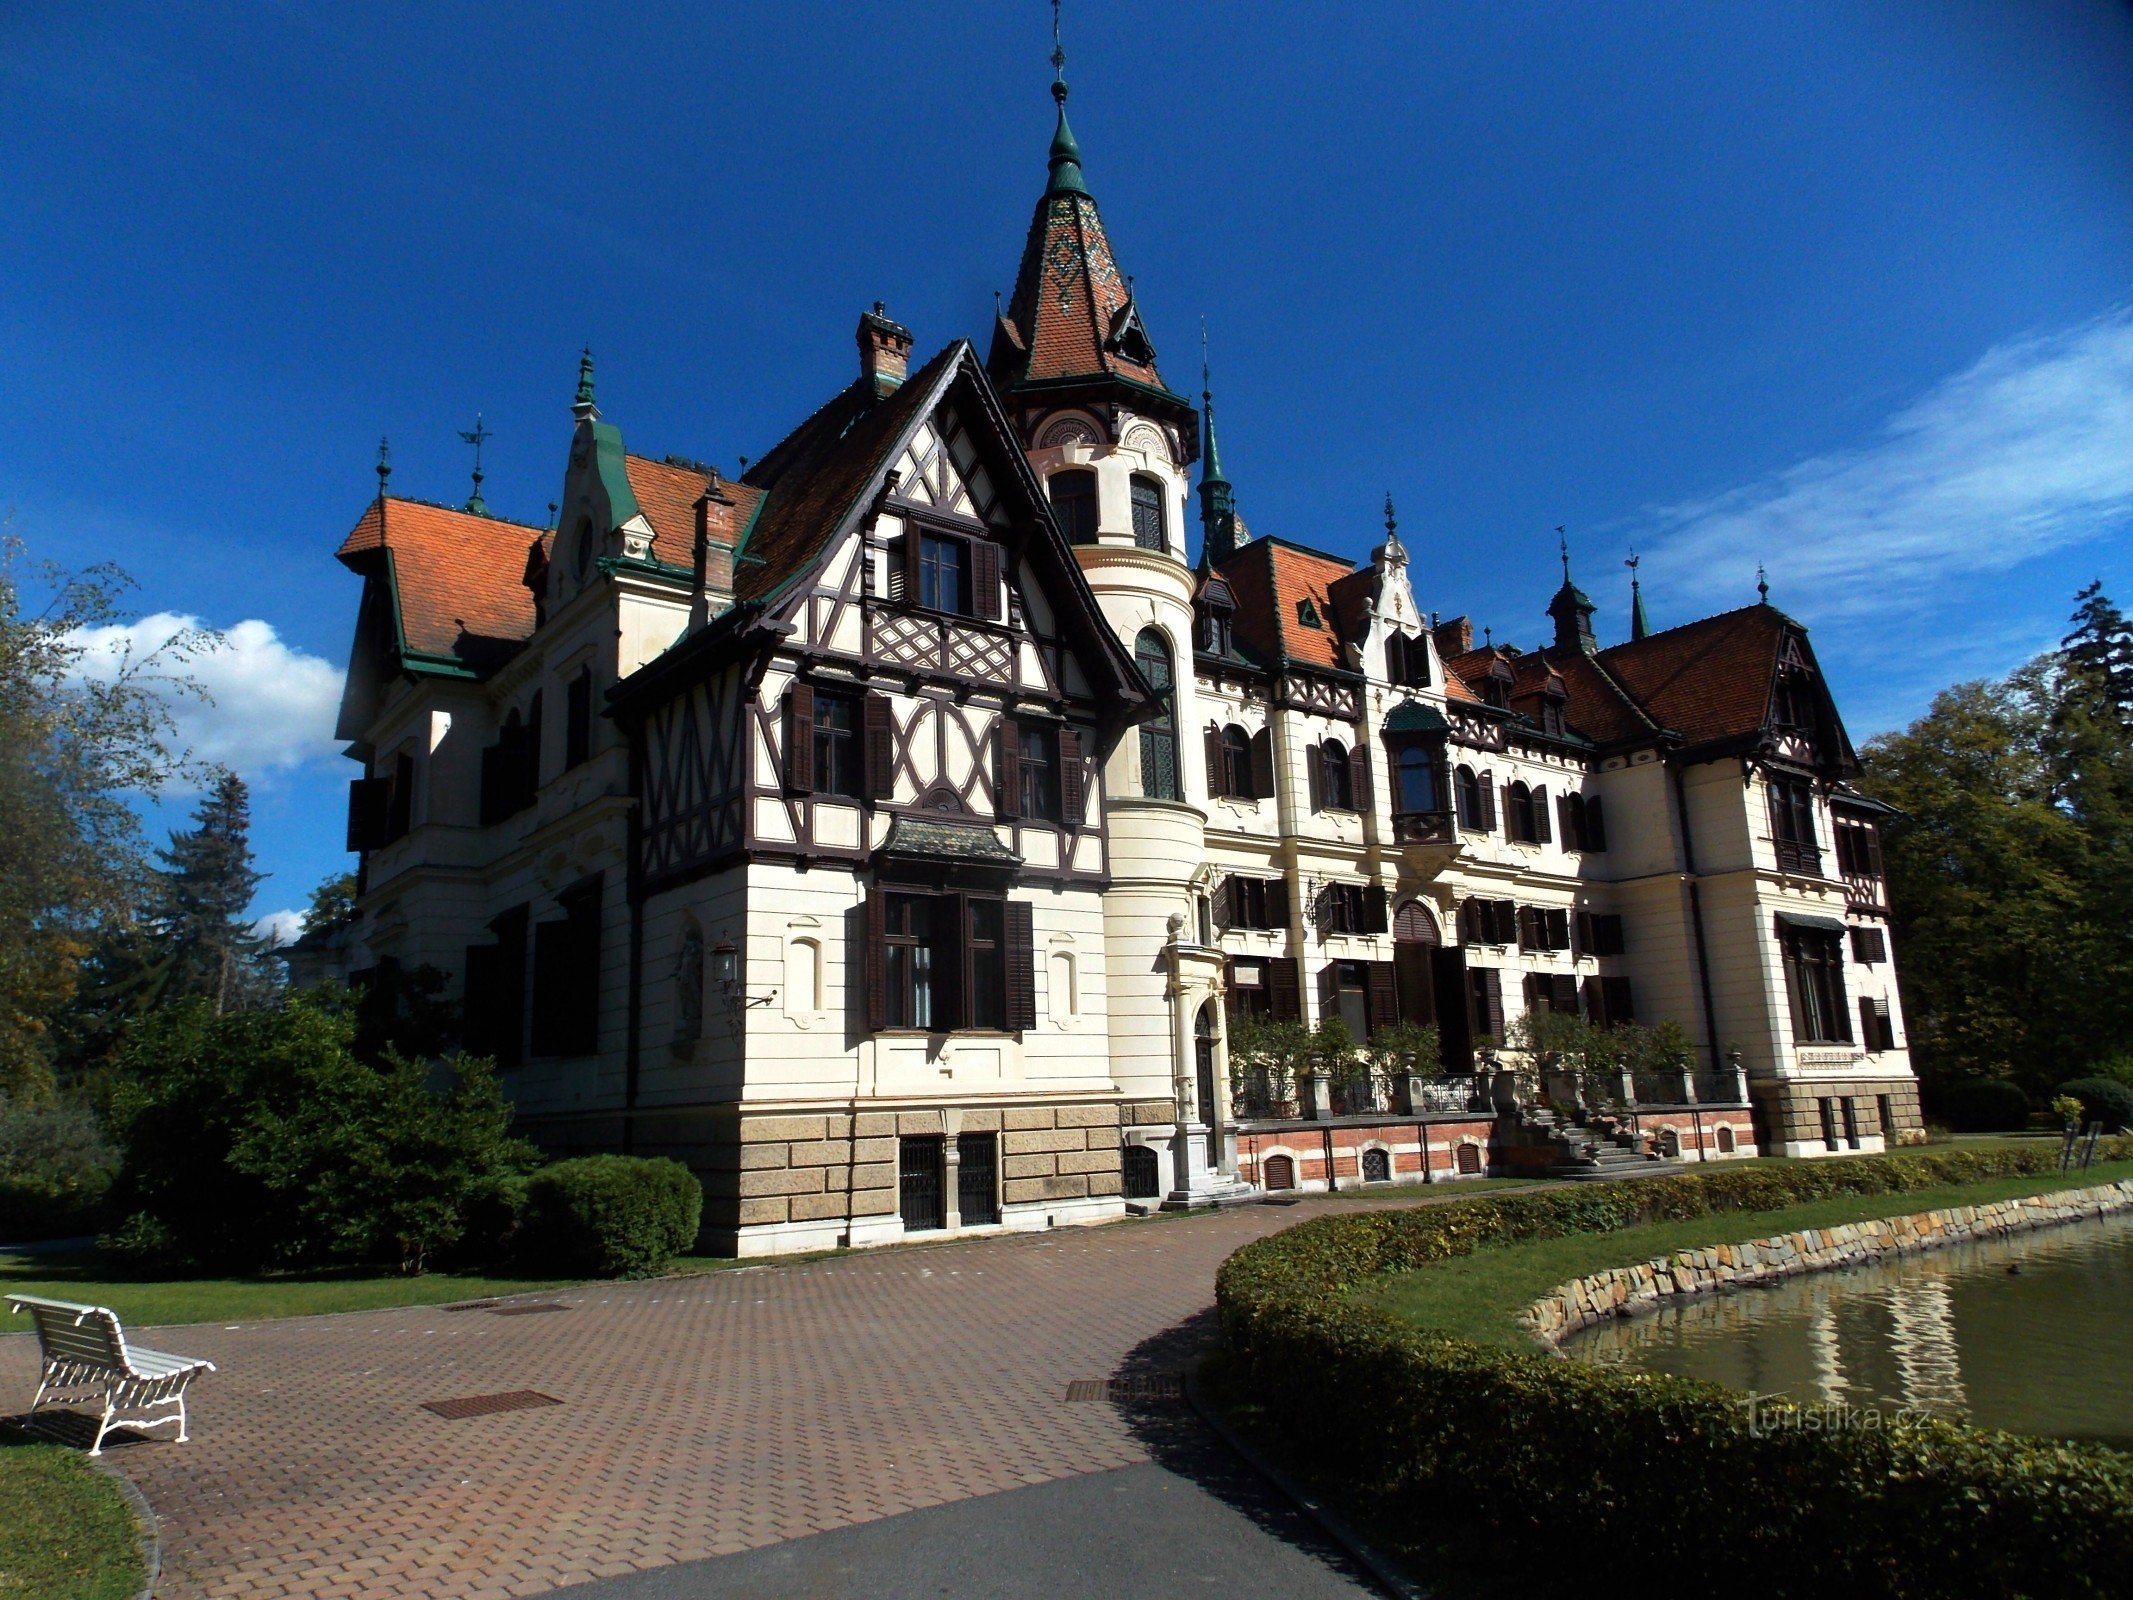 Do bajkovitog dvorca Lešná u blizini Zlíne